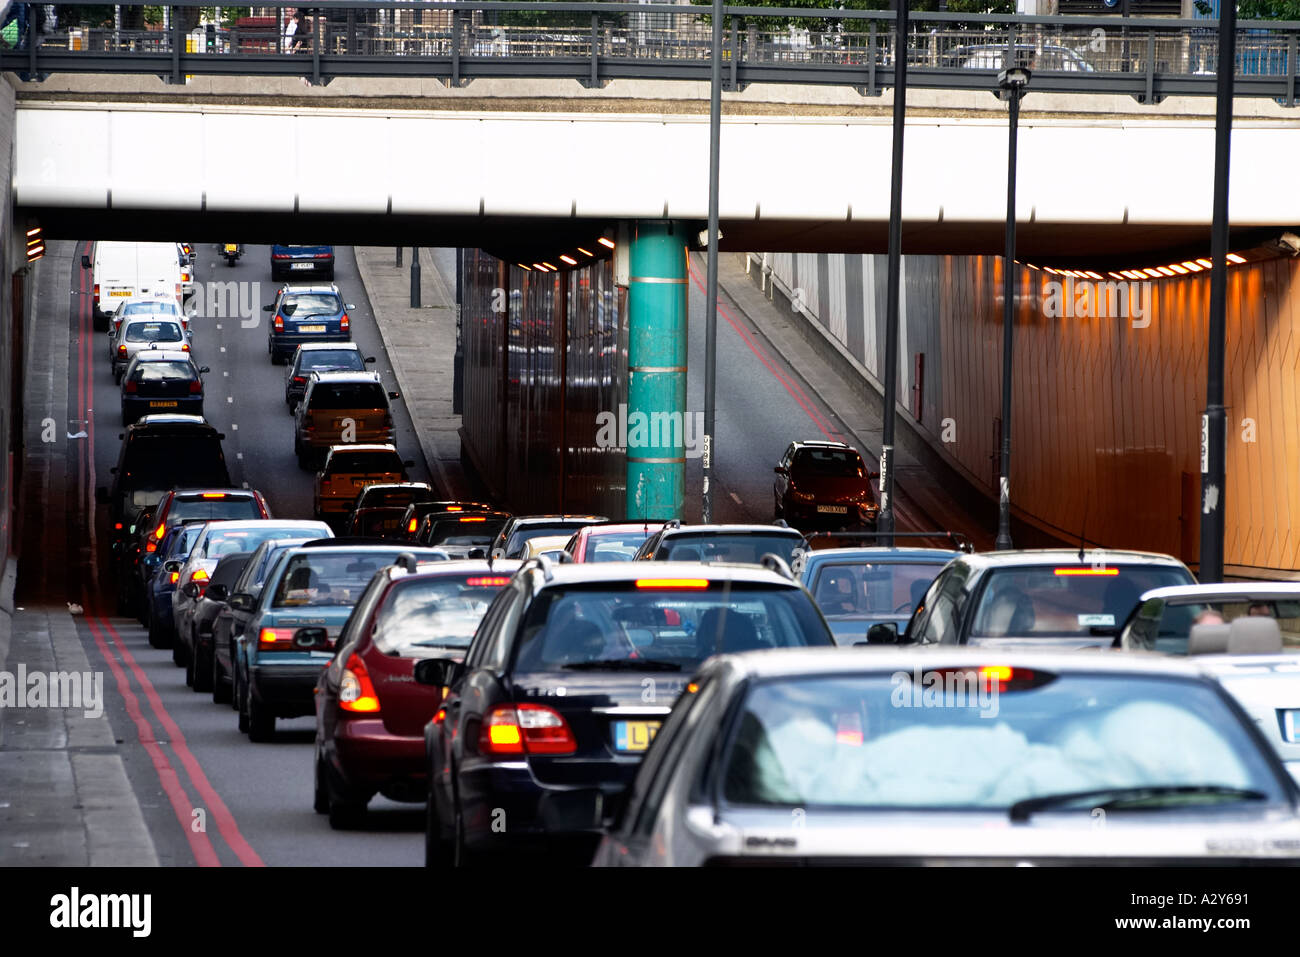 road traffic jam gridlock in england united kingdom uk great britain Stock Photo